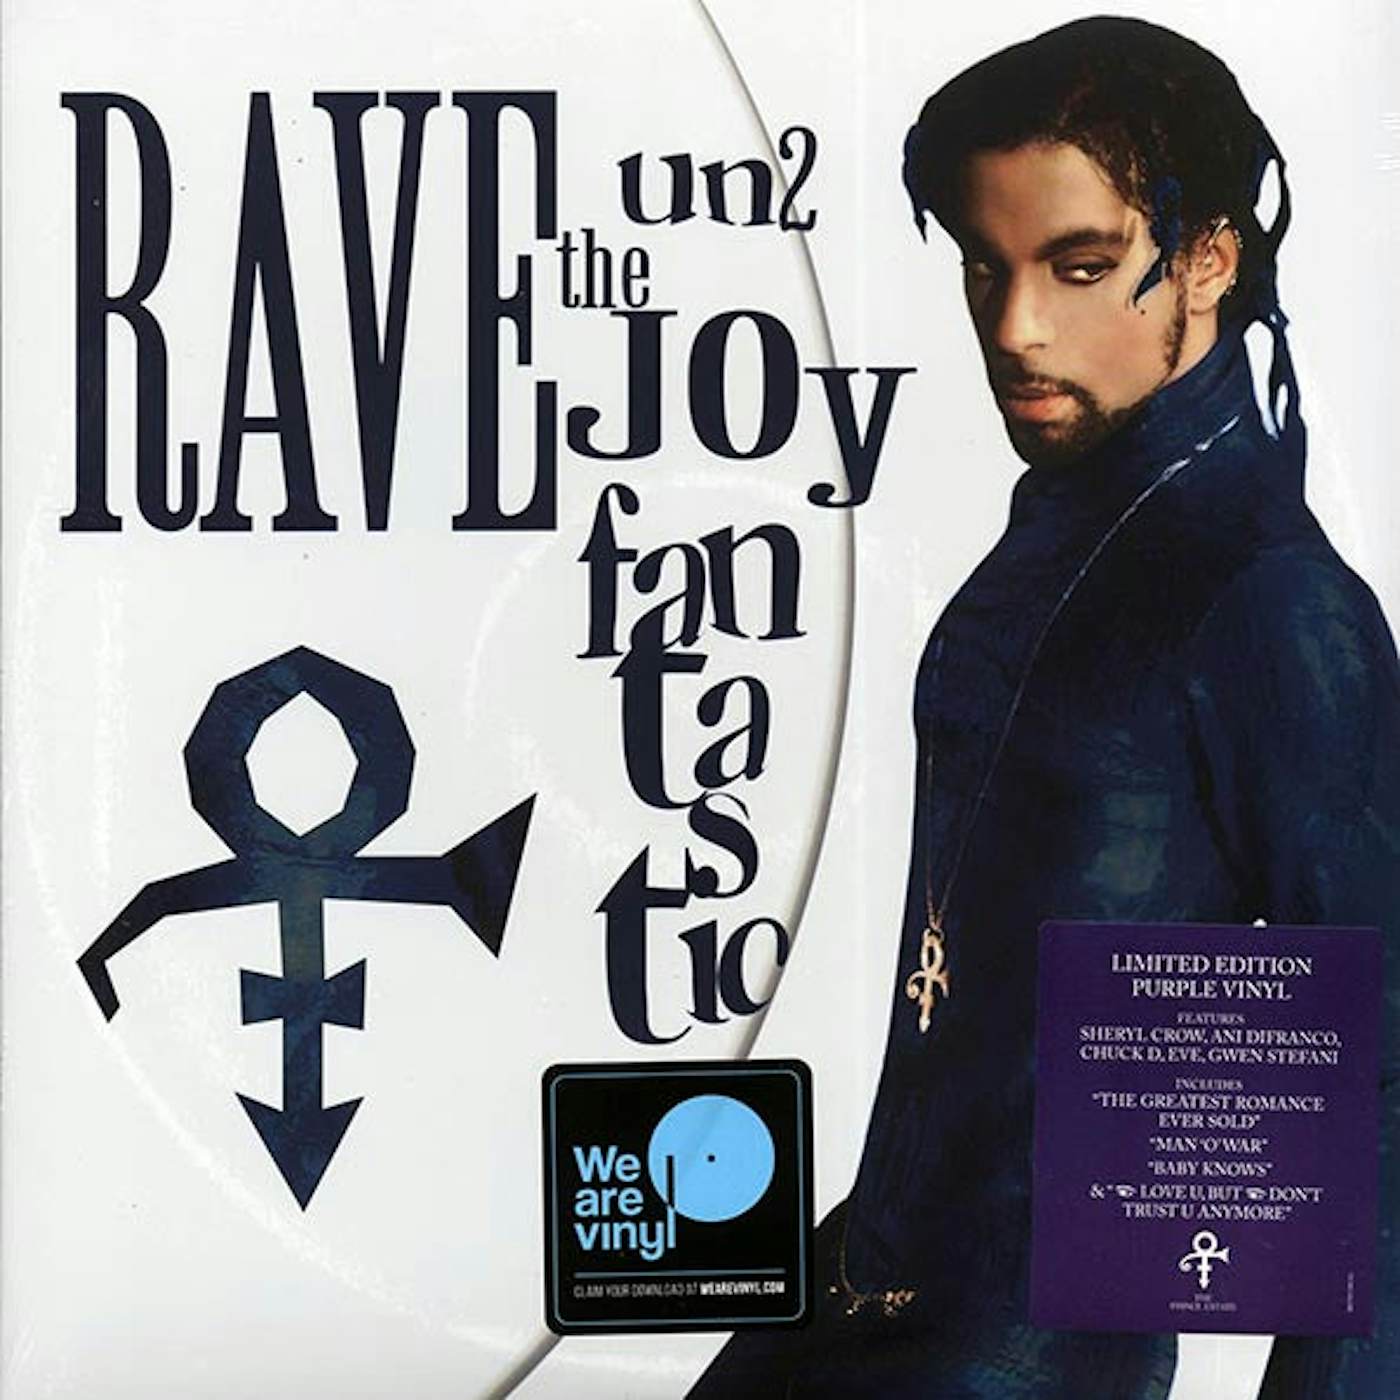 Prince  LP Vinyl Record -  Rave Un2 The Joy Fantastic (2xLP Vinyl Records)